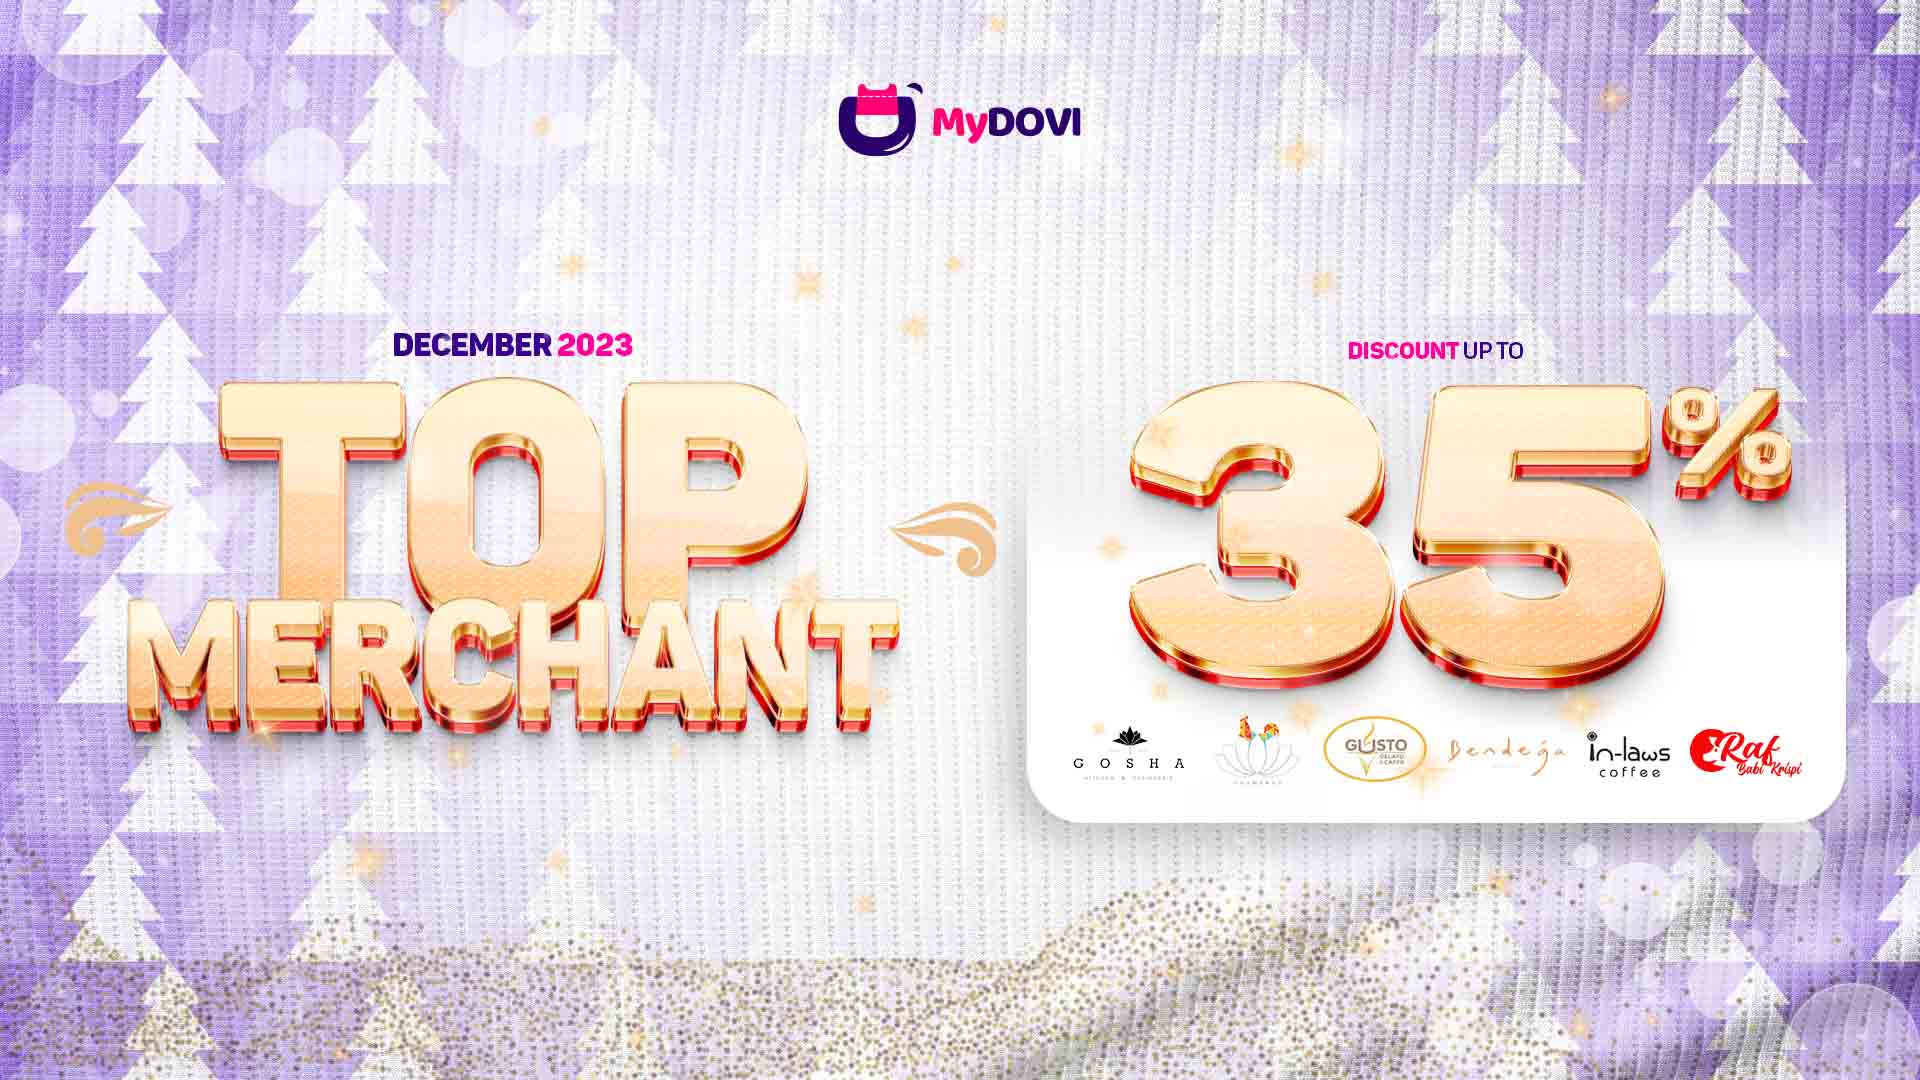 Simak Daftar Merchant yang Menjadi “Top Merchant” Desember 2023 di MyDOVI